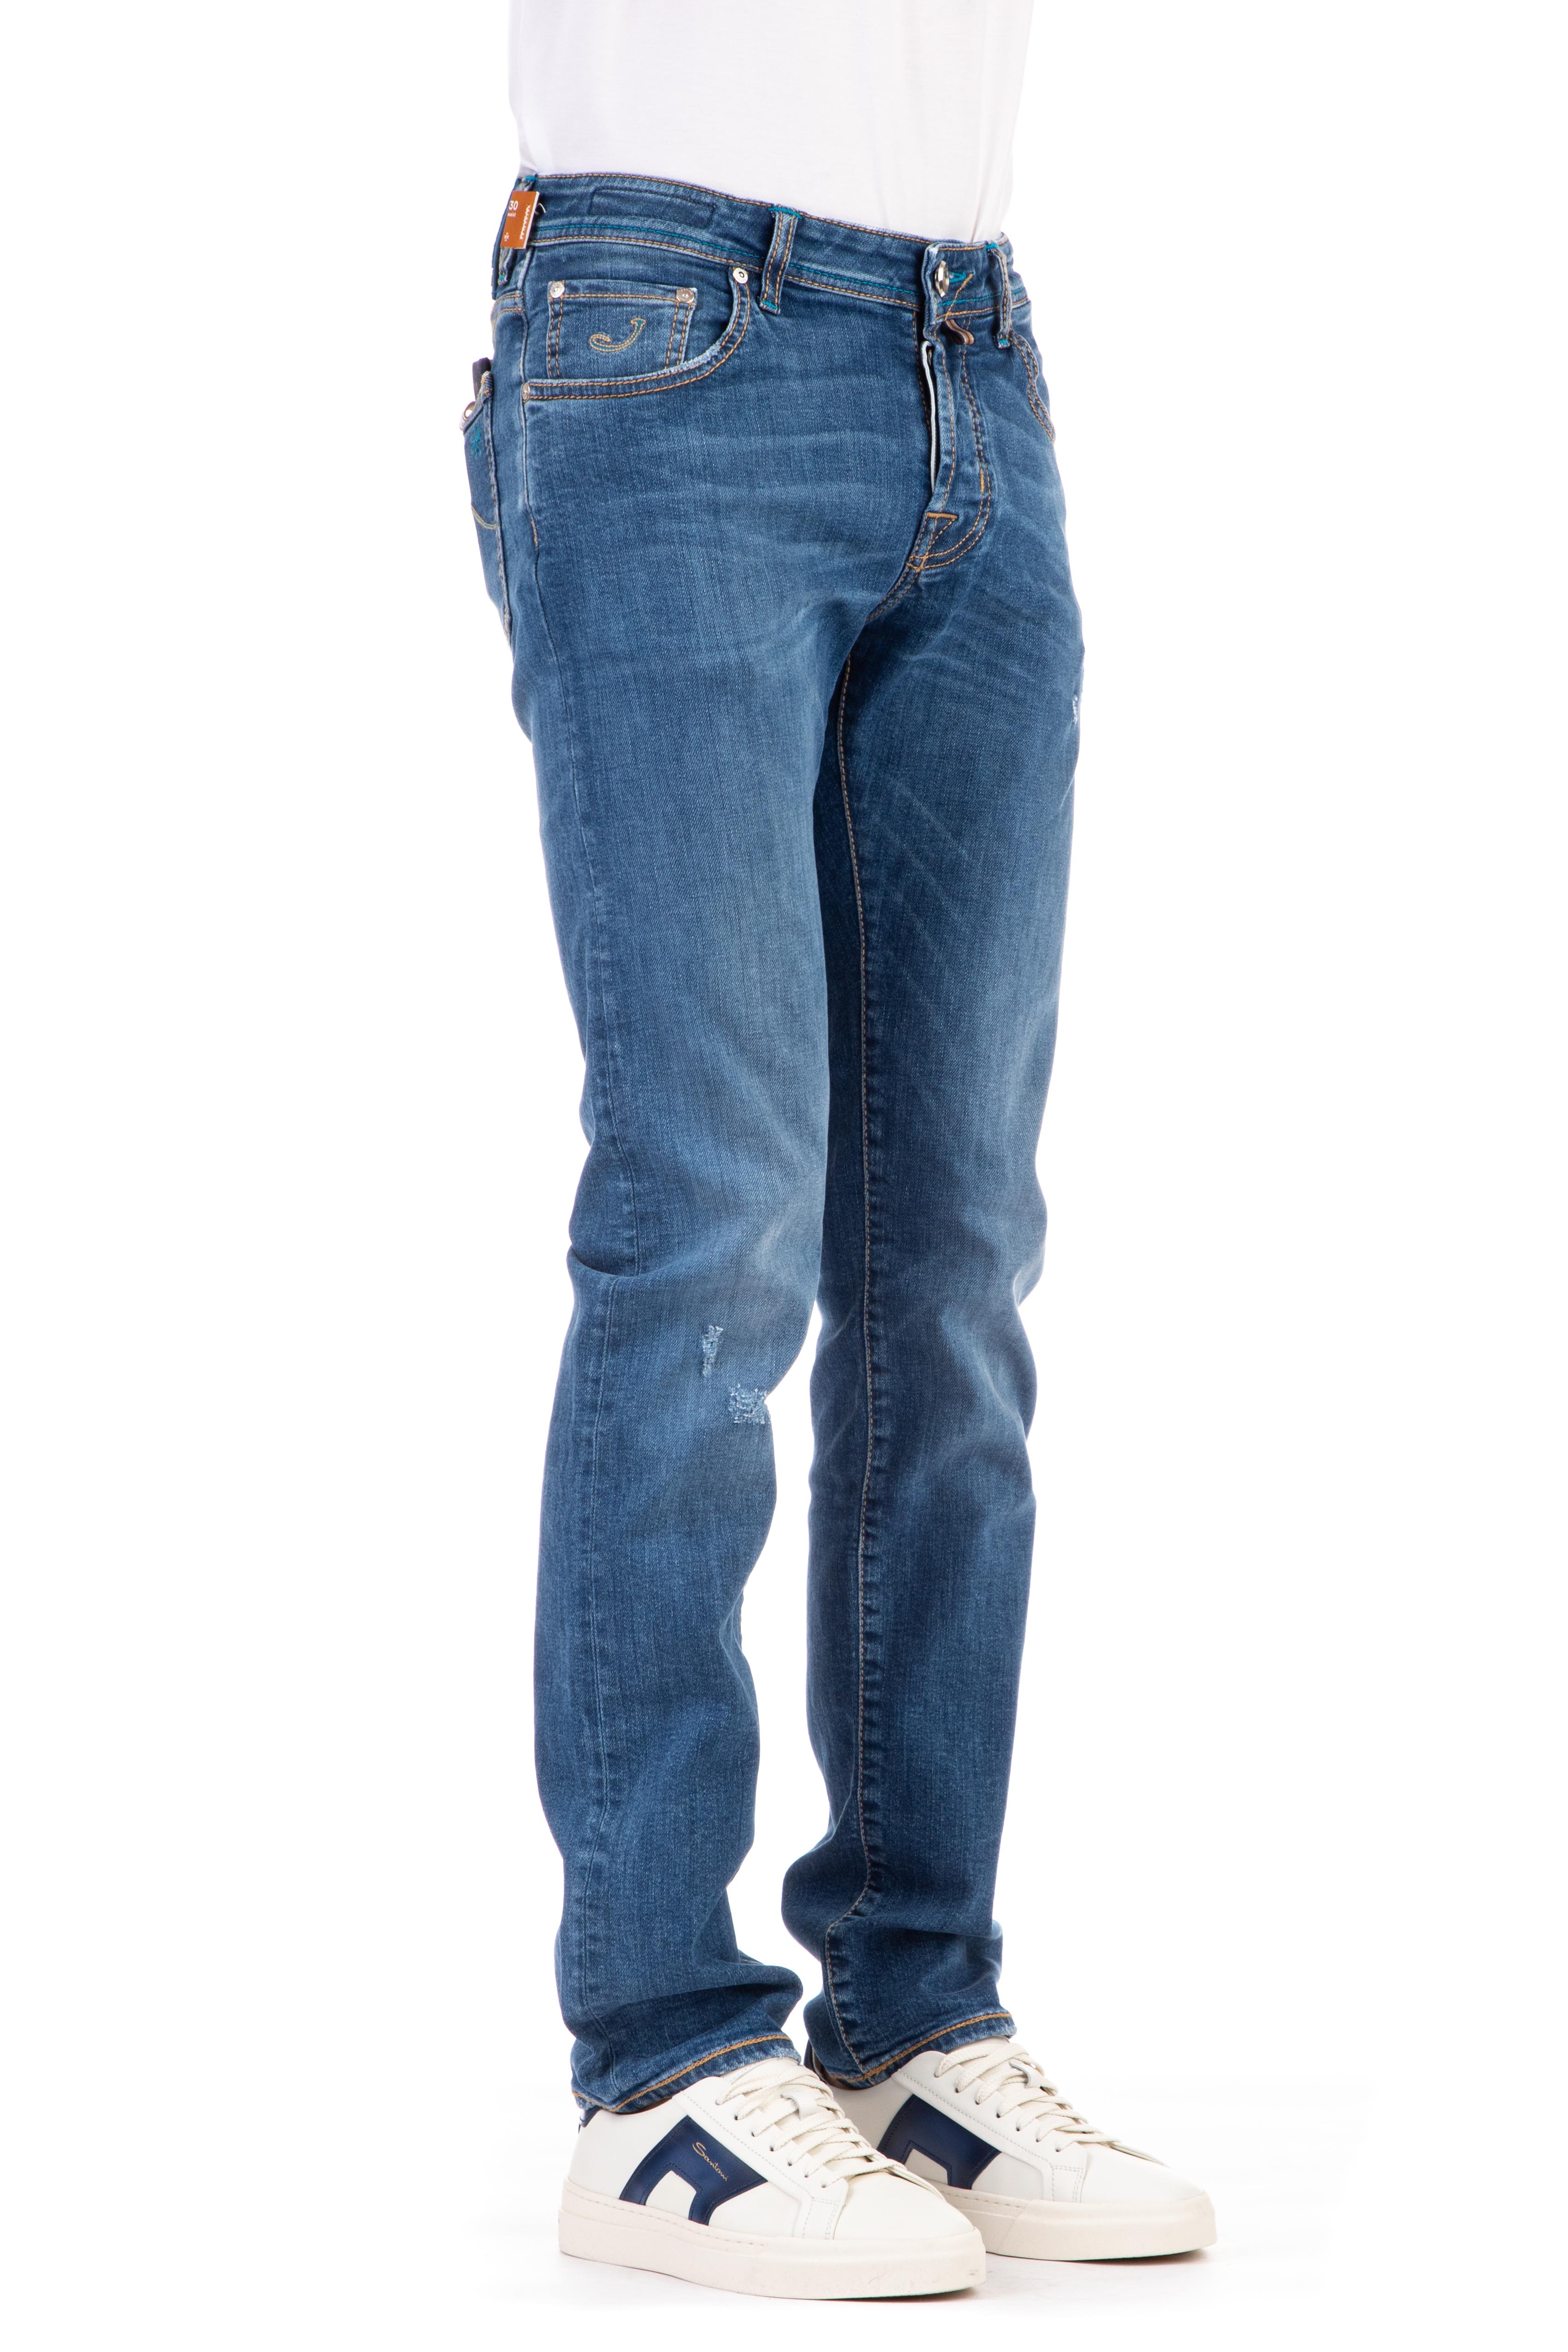 Jeans limited edition etichettaazzurranick fit